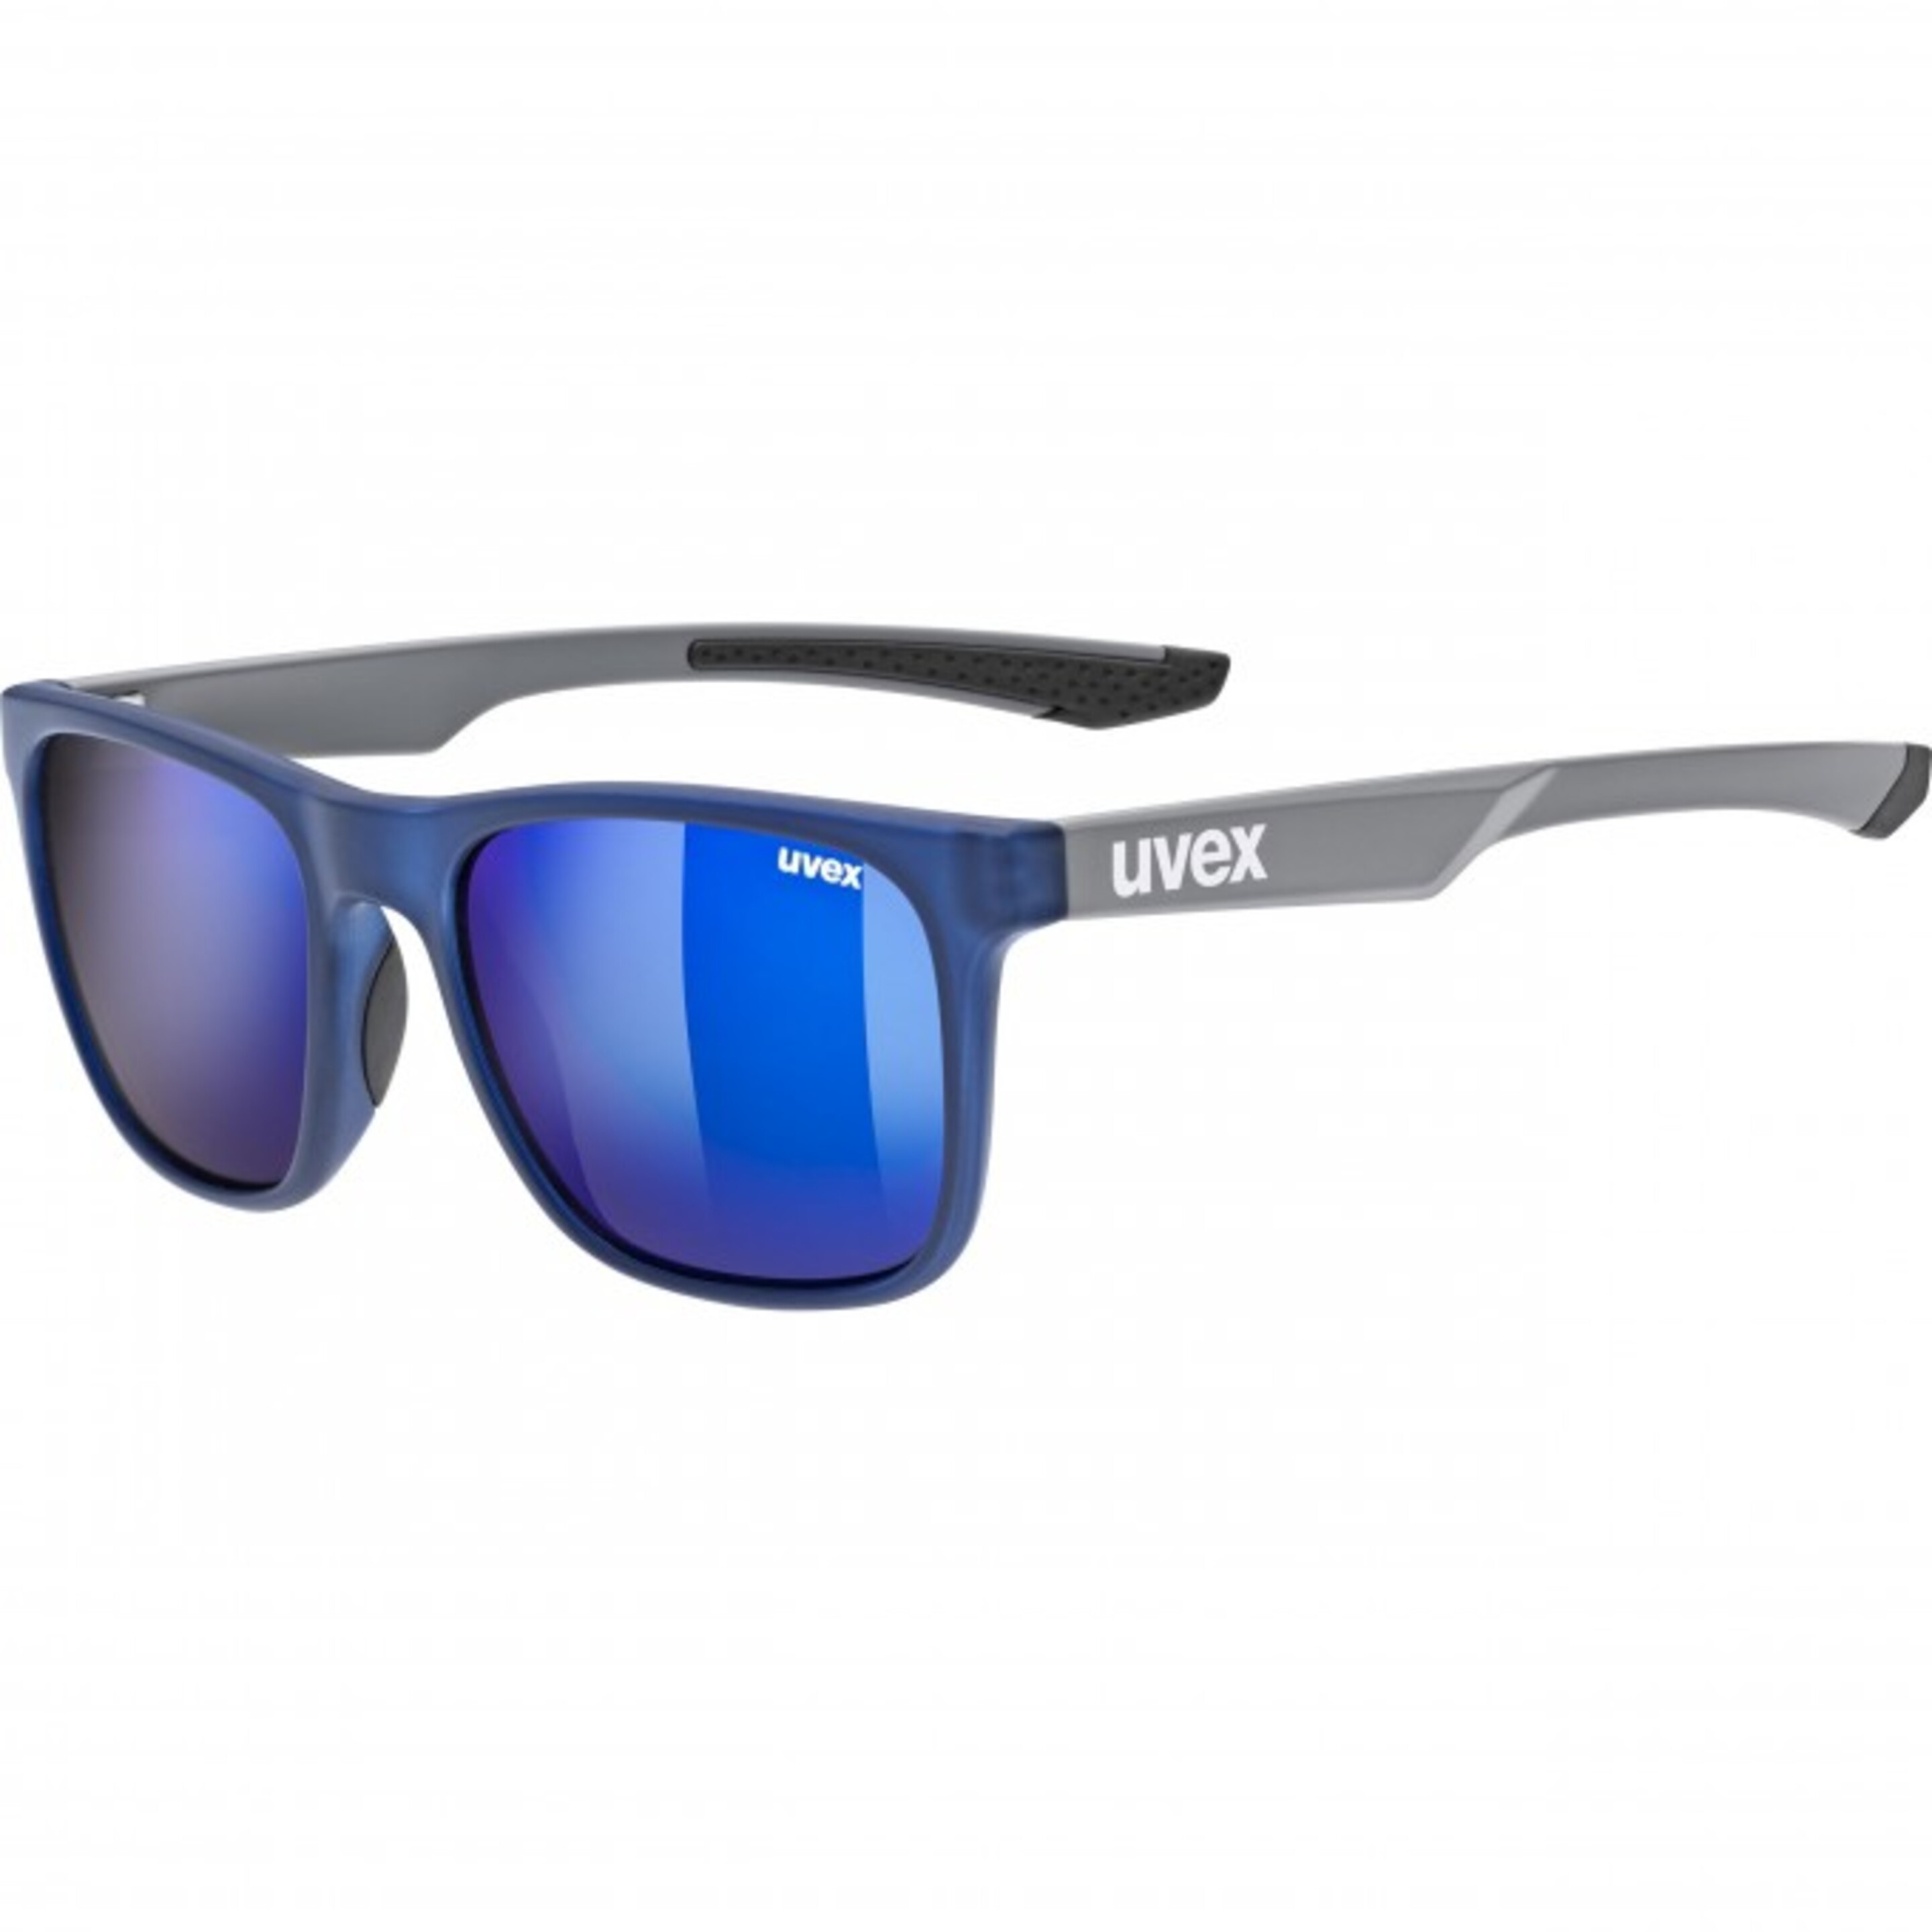 Gafas De Sol Uvex Lgl 42 Blue Grey - azul - 